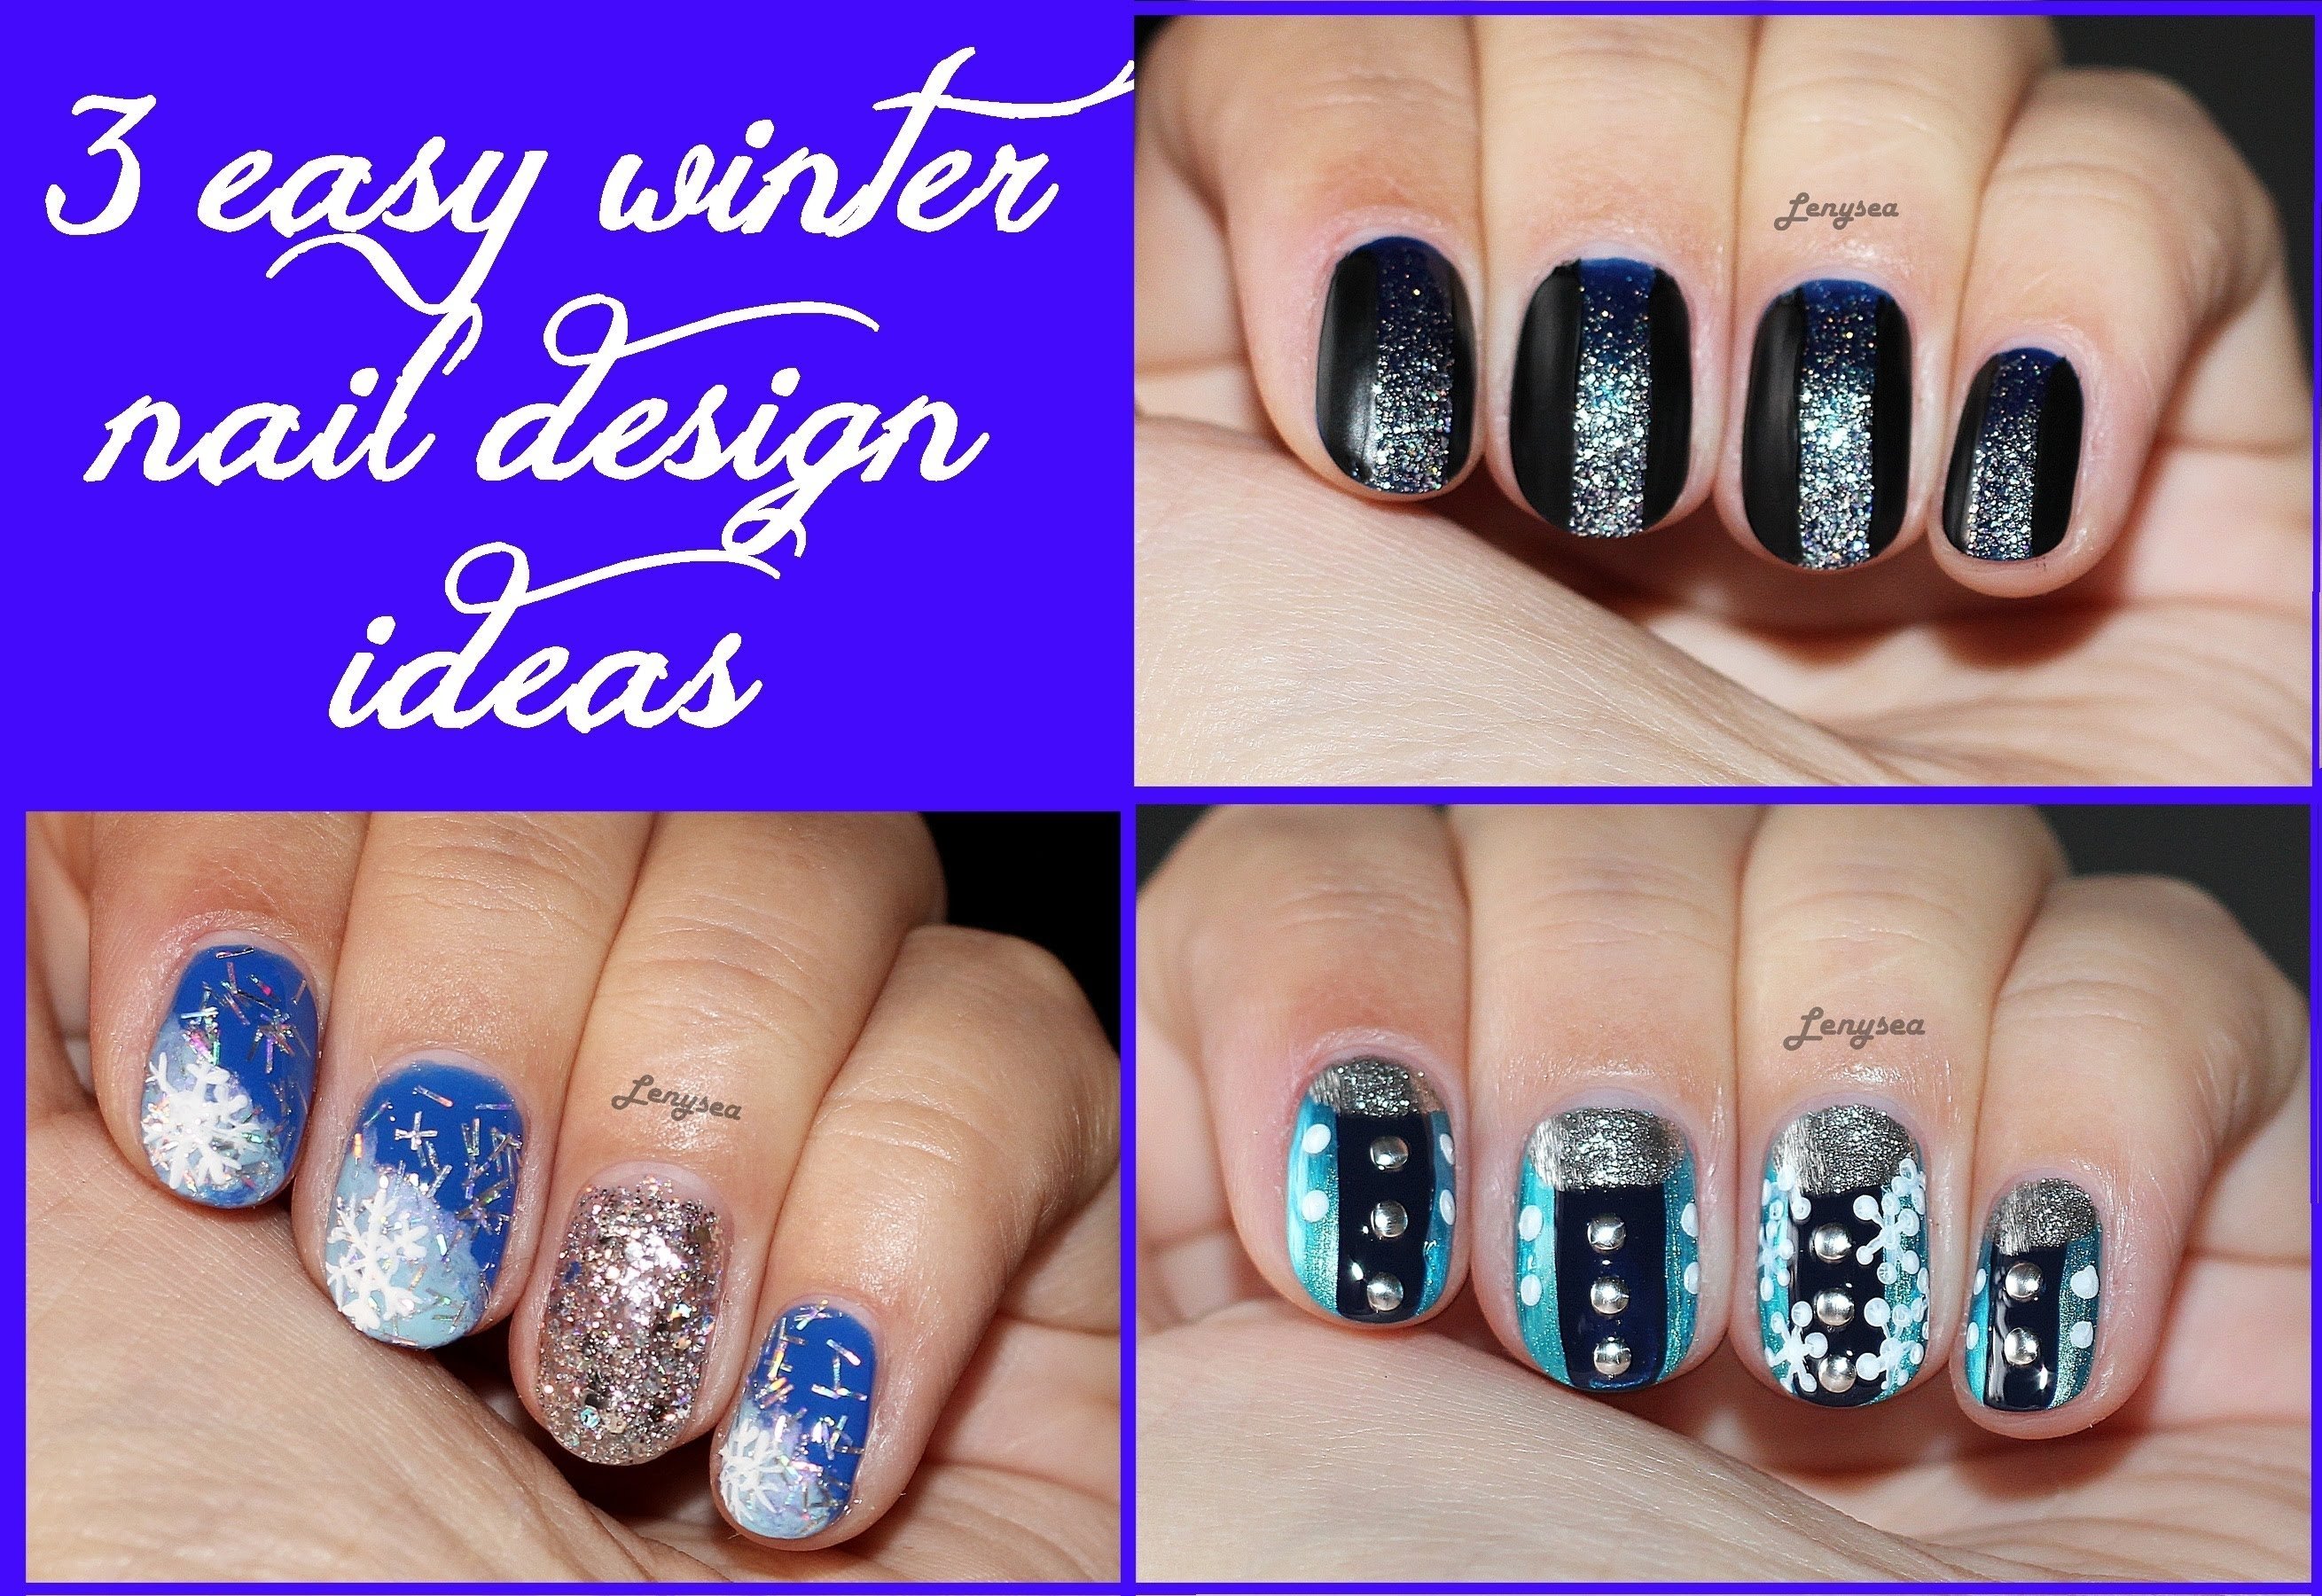 10 Spectacular Cute Nail Ideas For Winter nail art designs three easy winter nail designs for short nails 3 2022